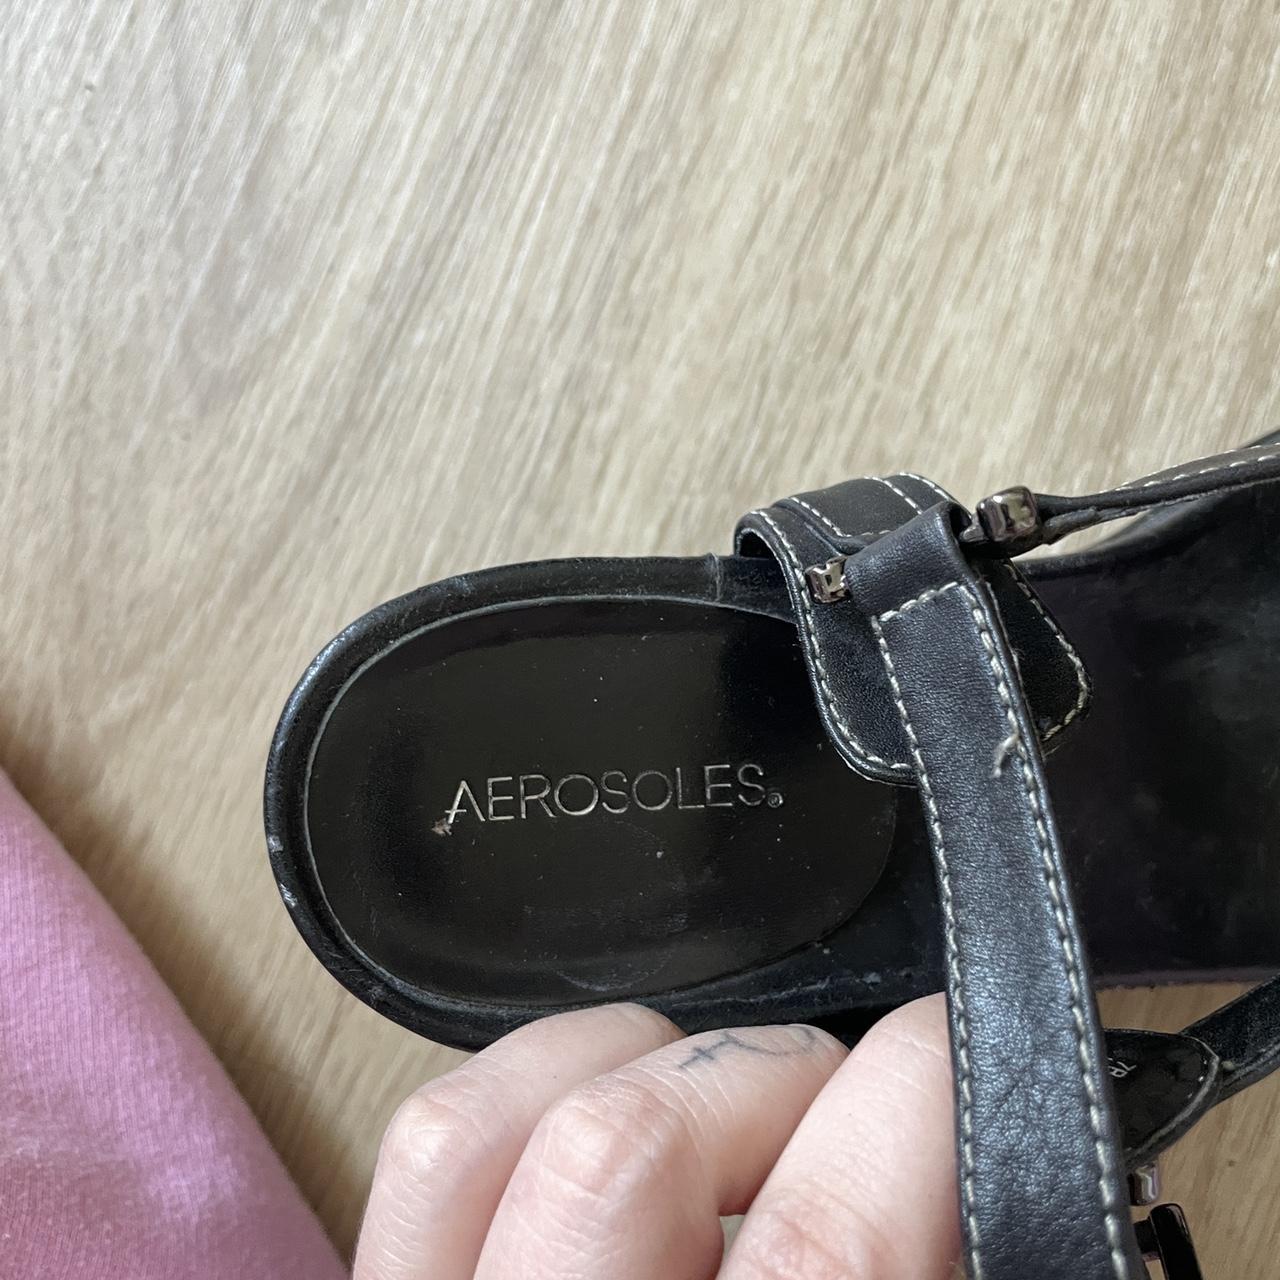 Aerosoles Women's Black and White Sandals (5)